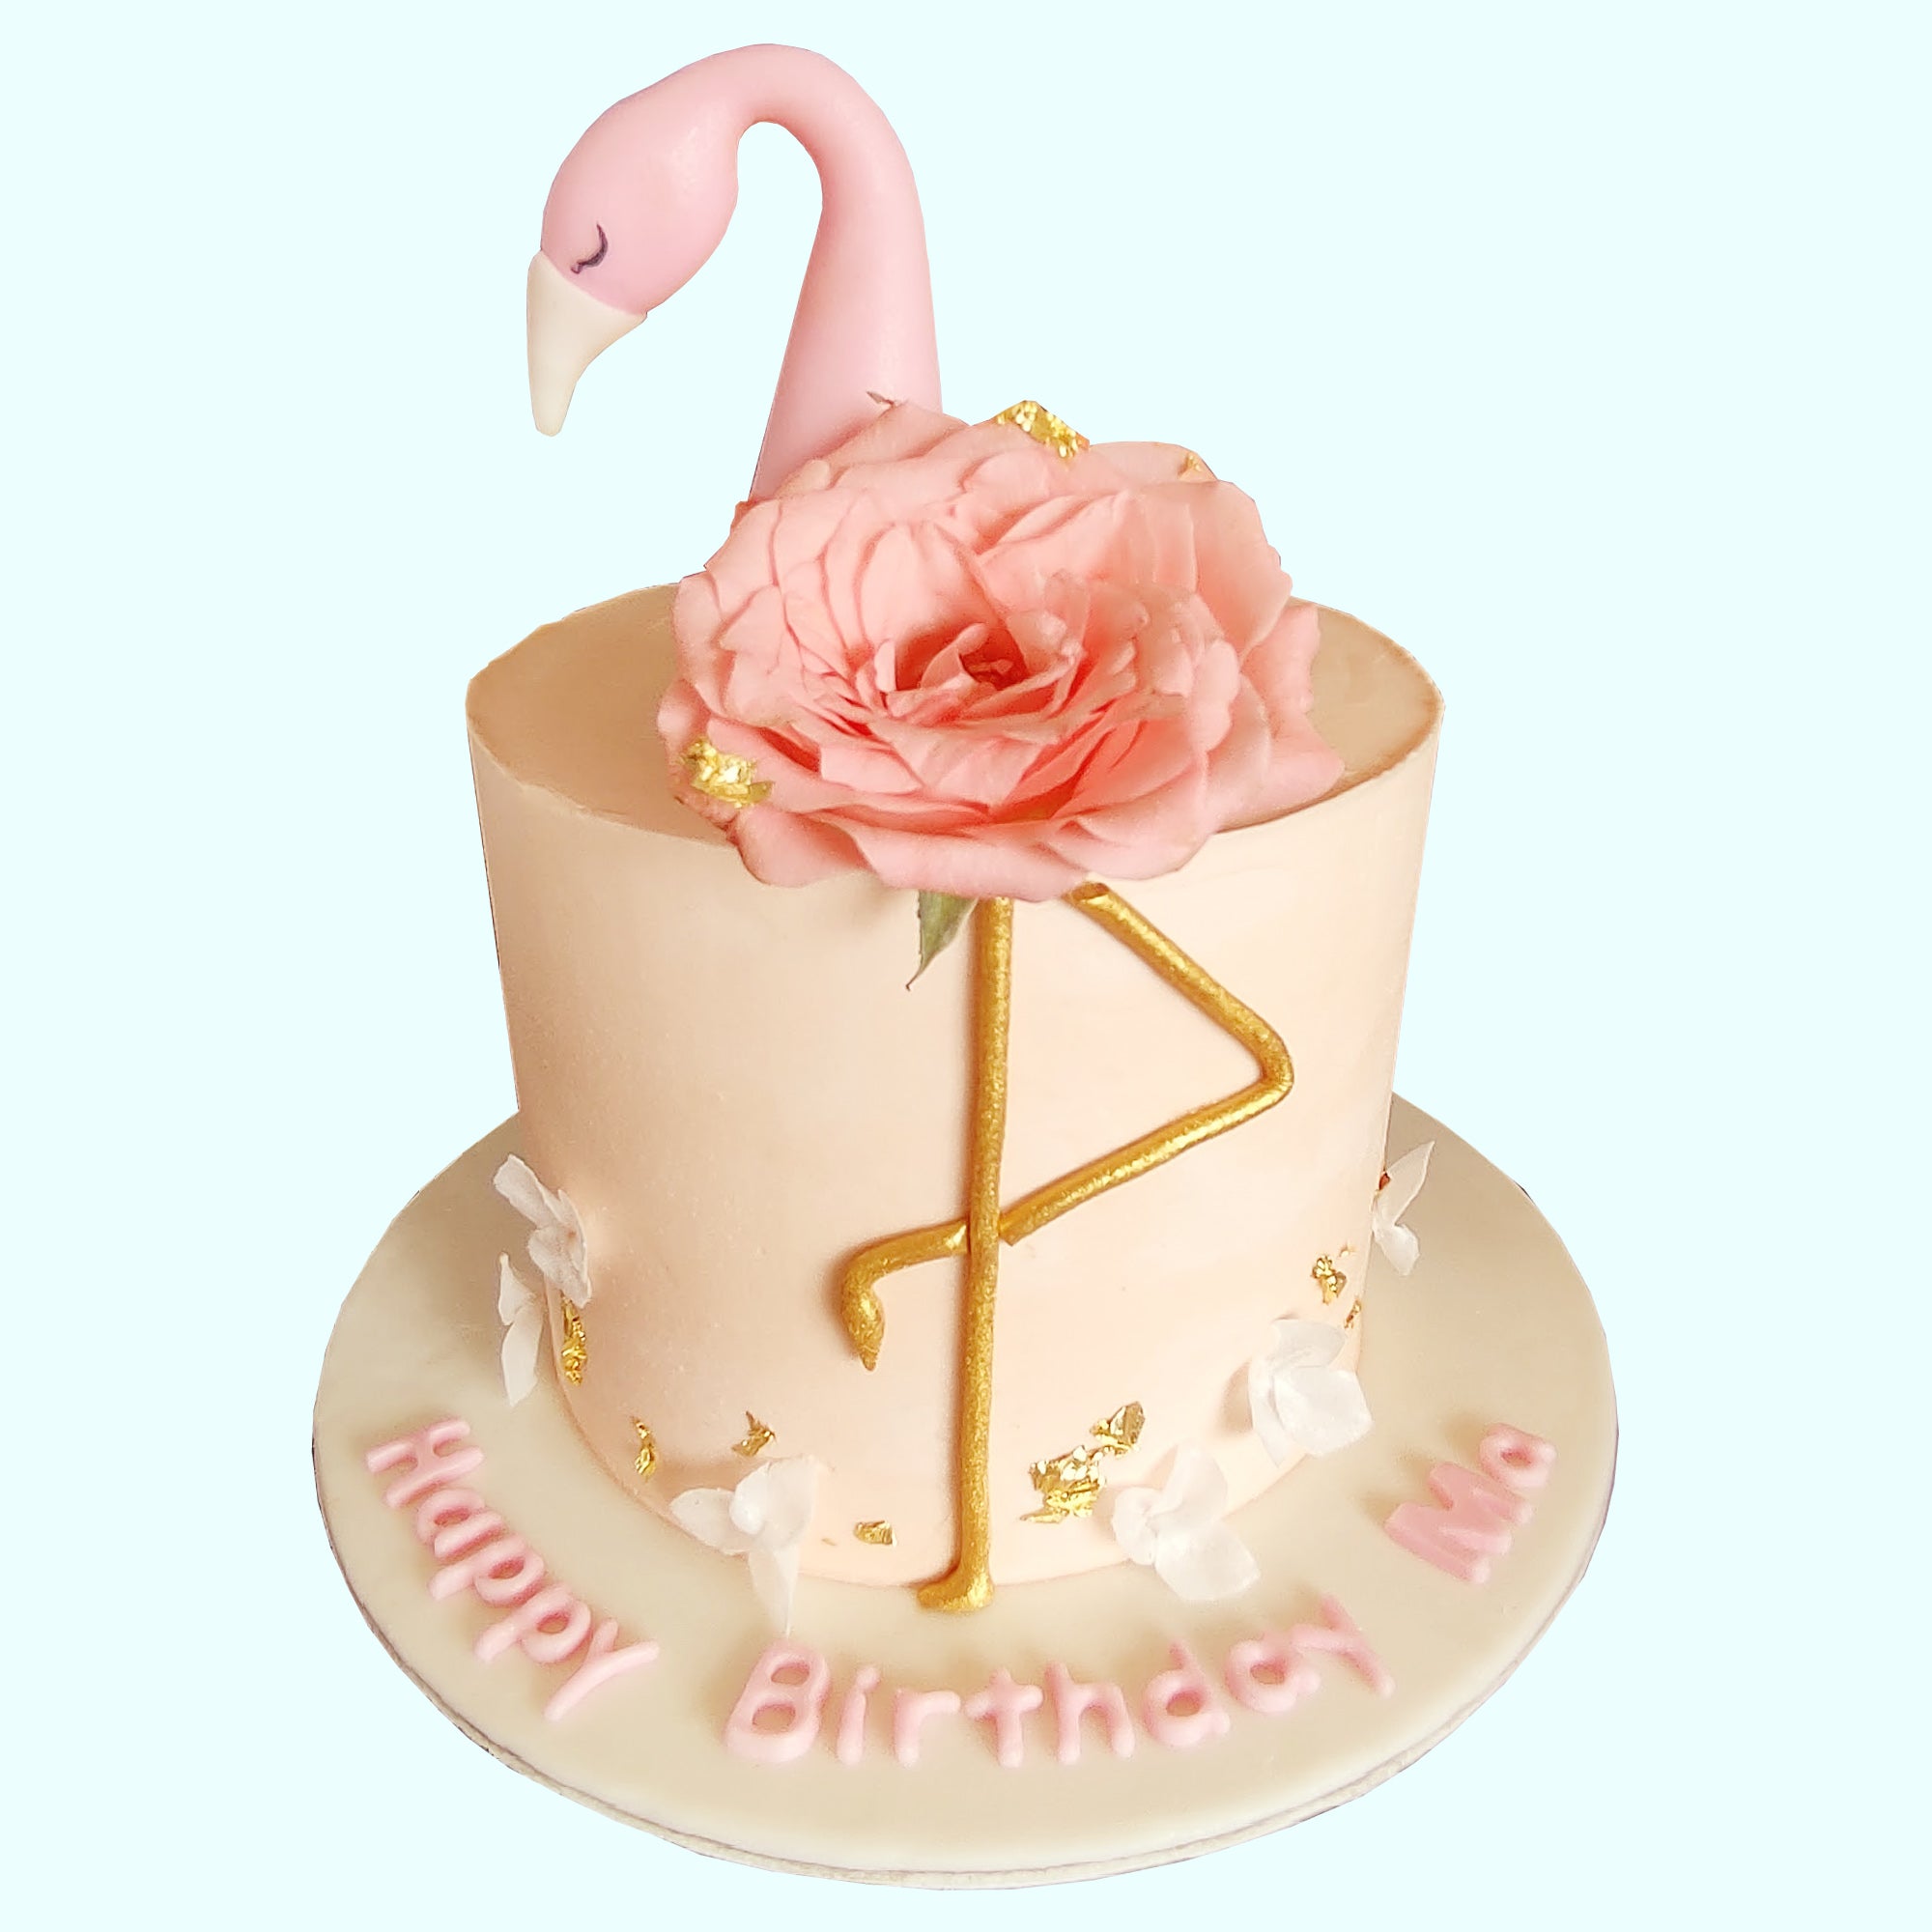 A-2 CLASSIC ROSE CAKE — Amphora Bakery